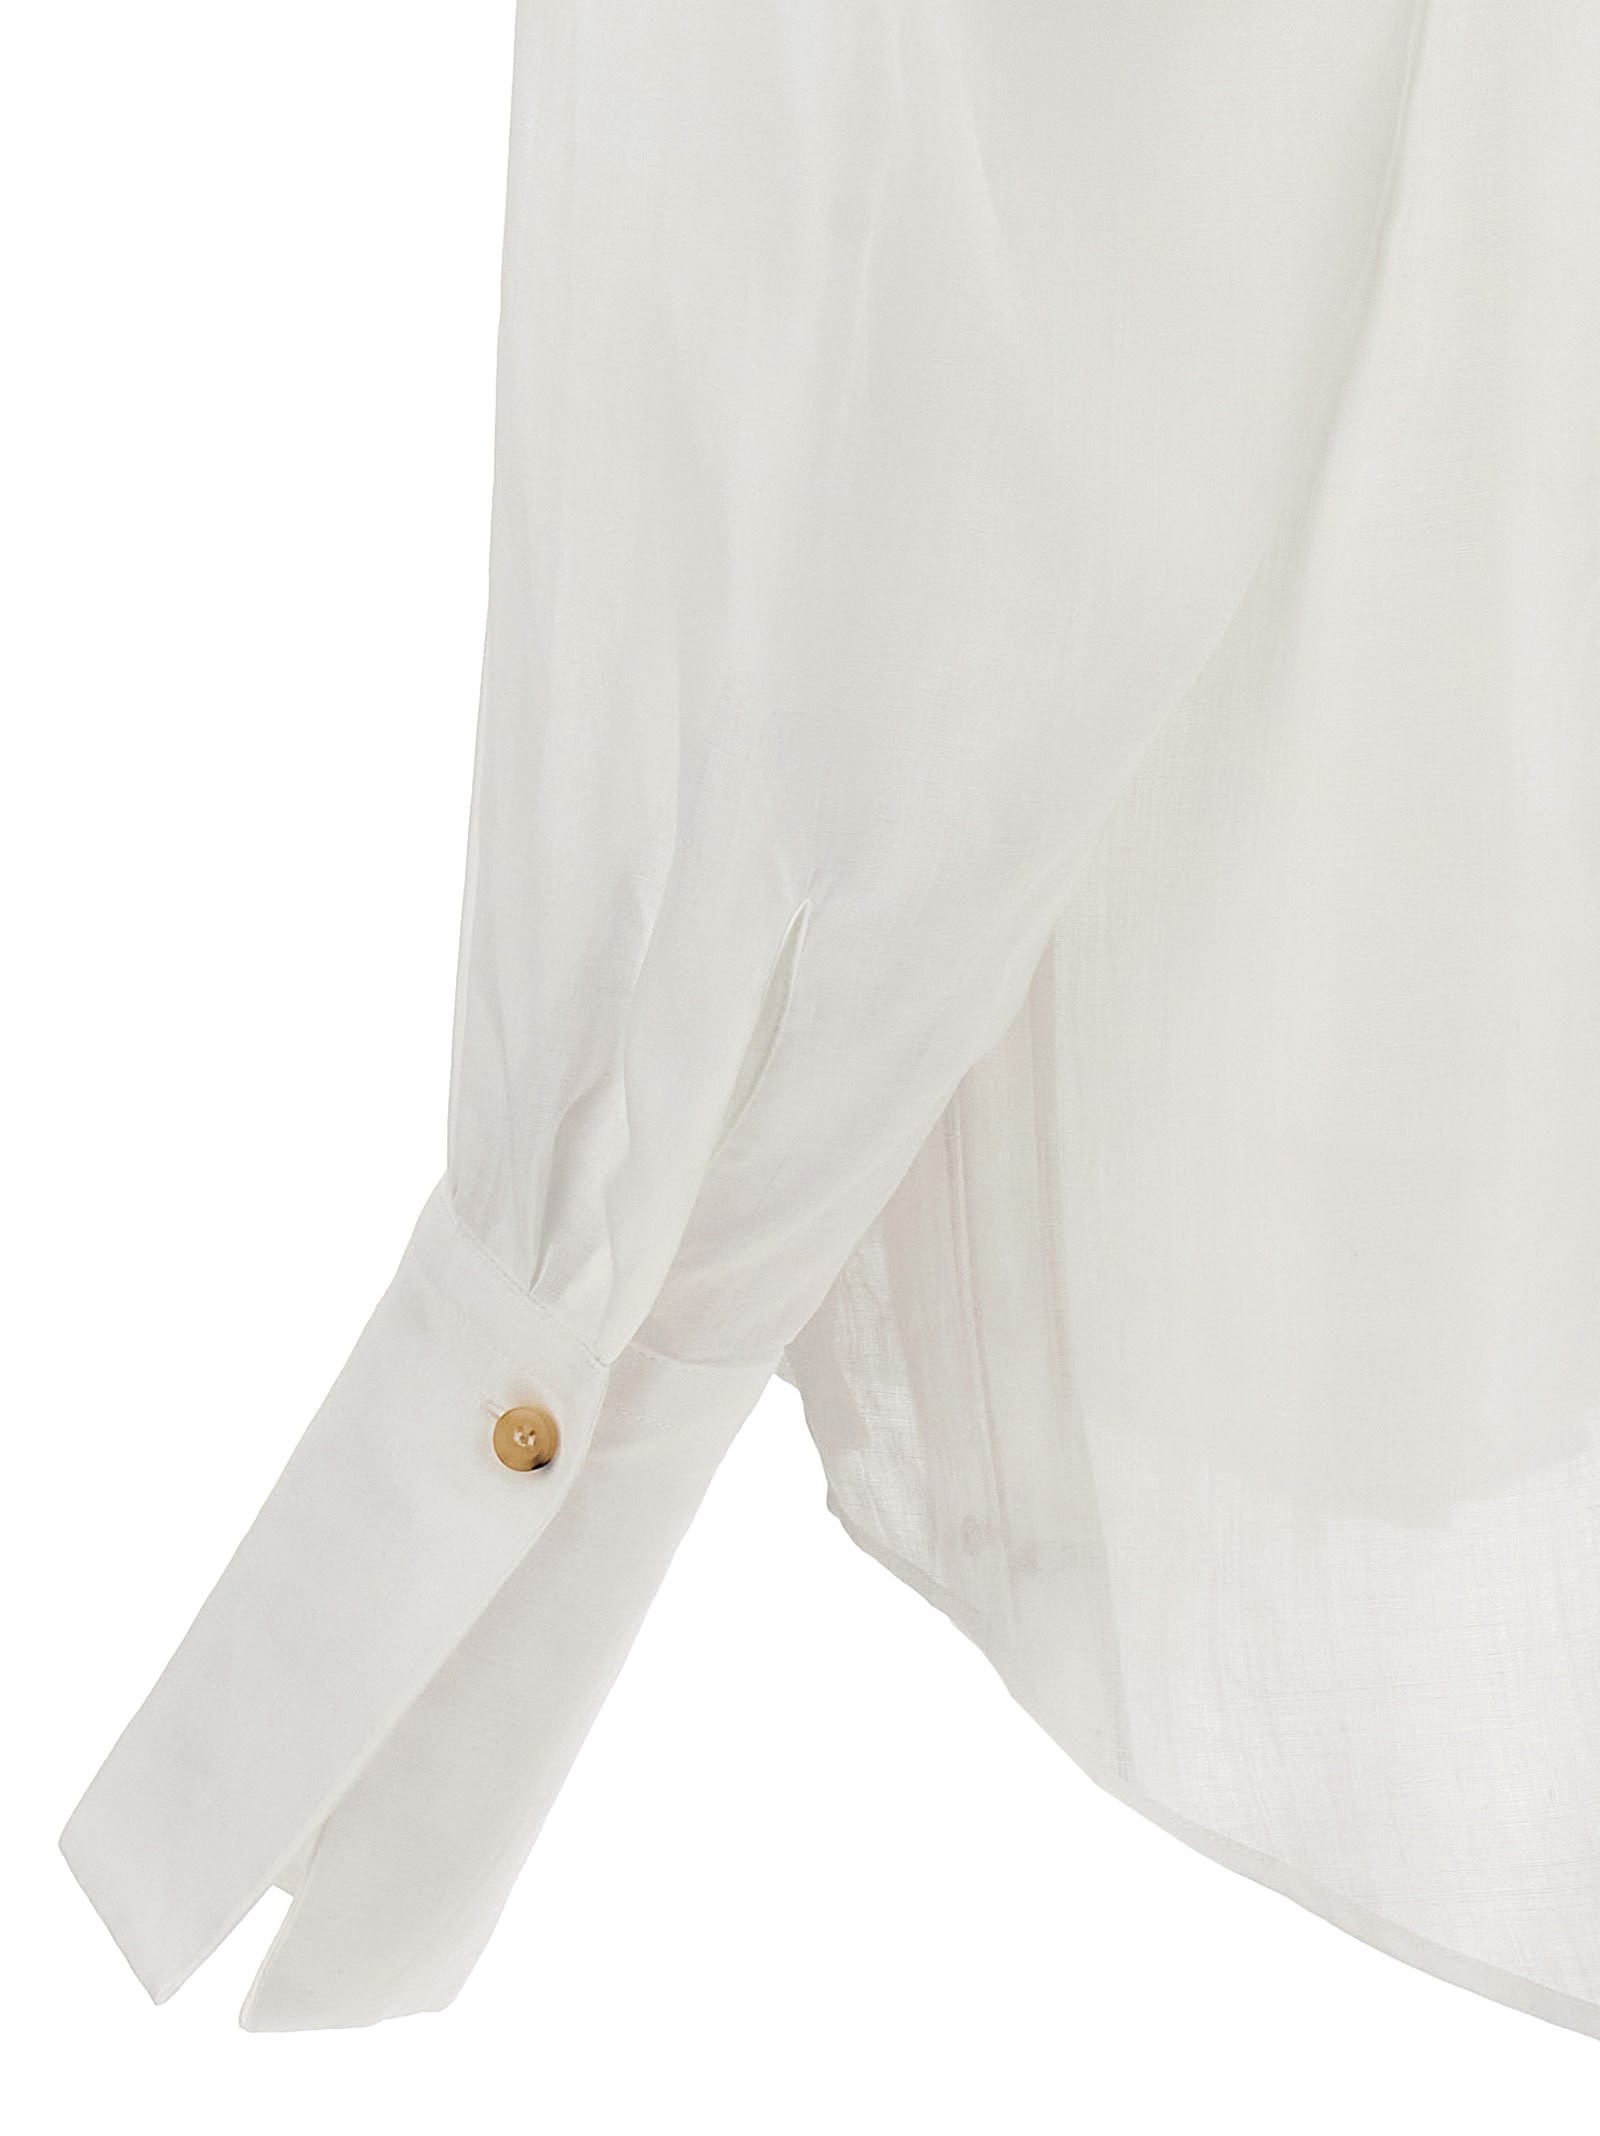 Shop Ermanno Scervino Embroidery Shirt In White